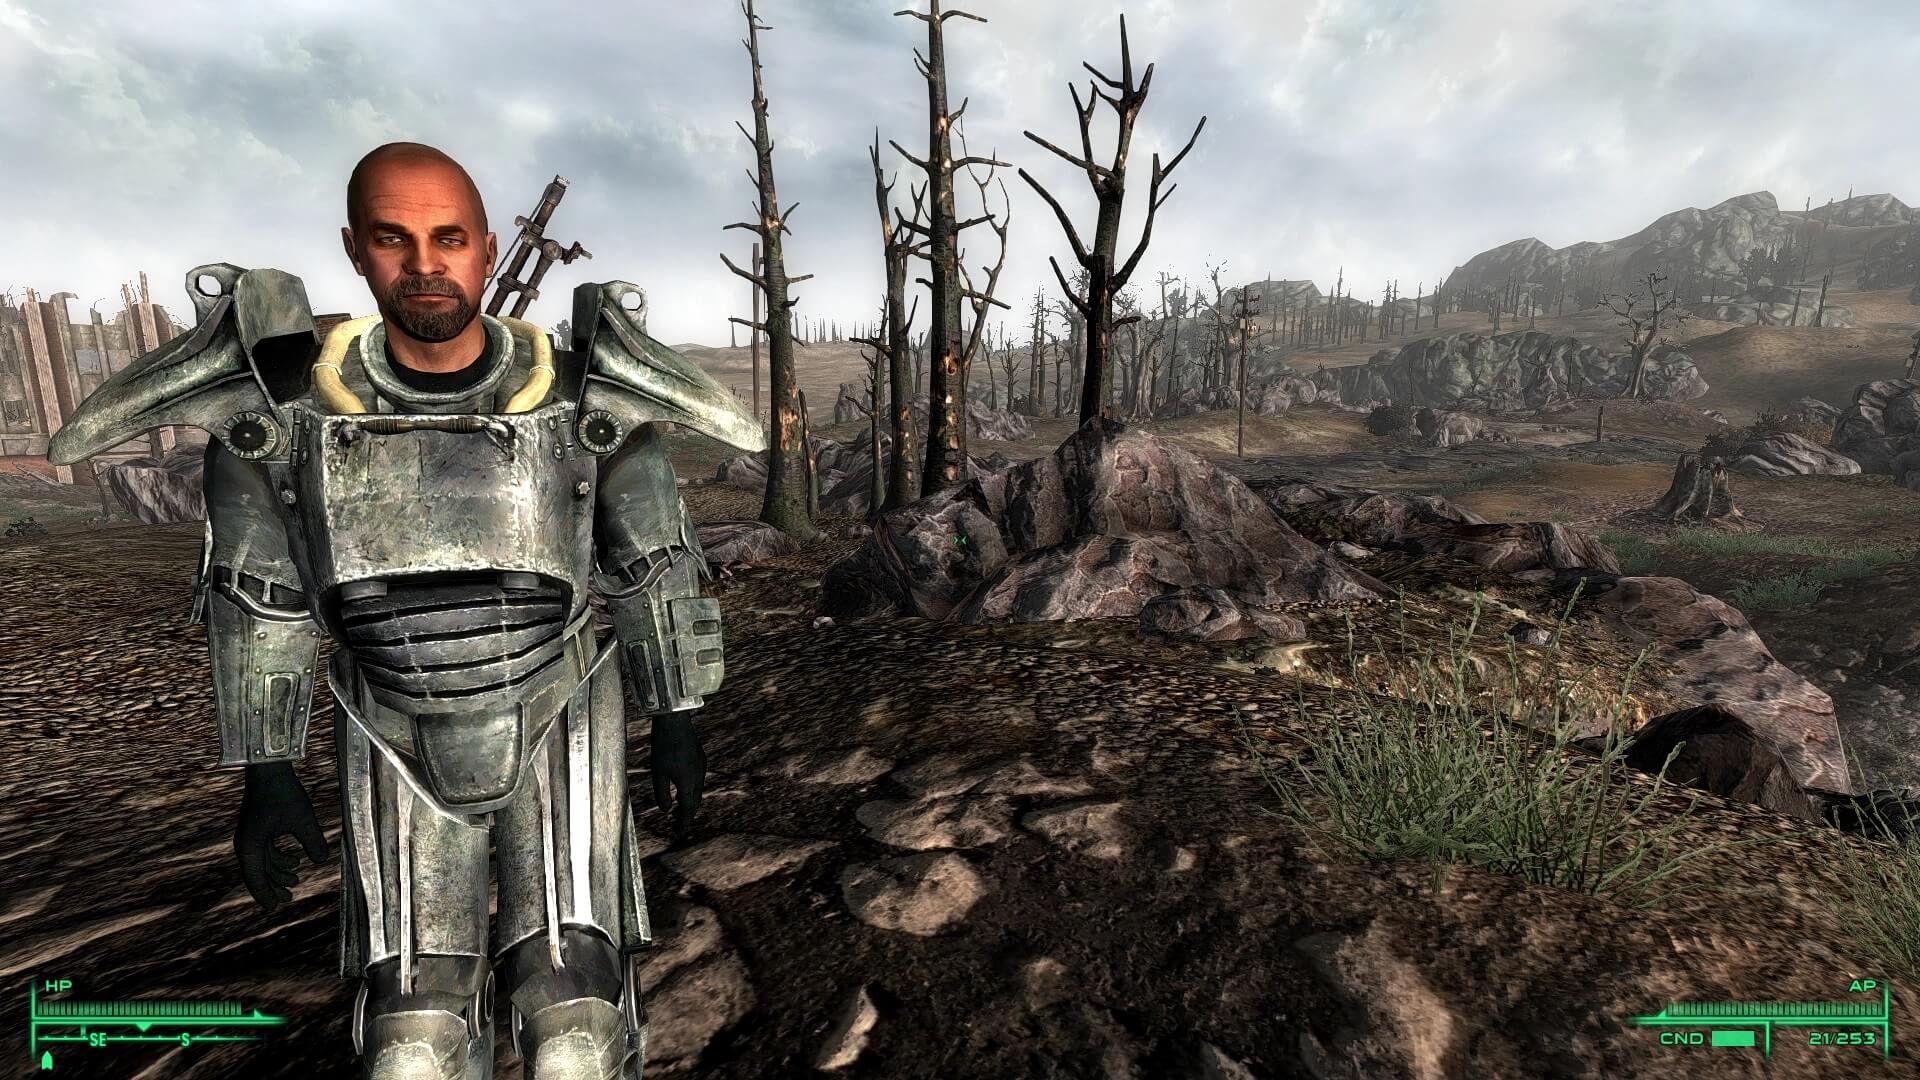 10 Best Armor Mods For Fallout 3 (All Free) – FandomSpot